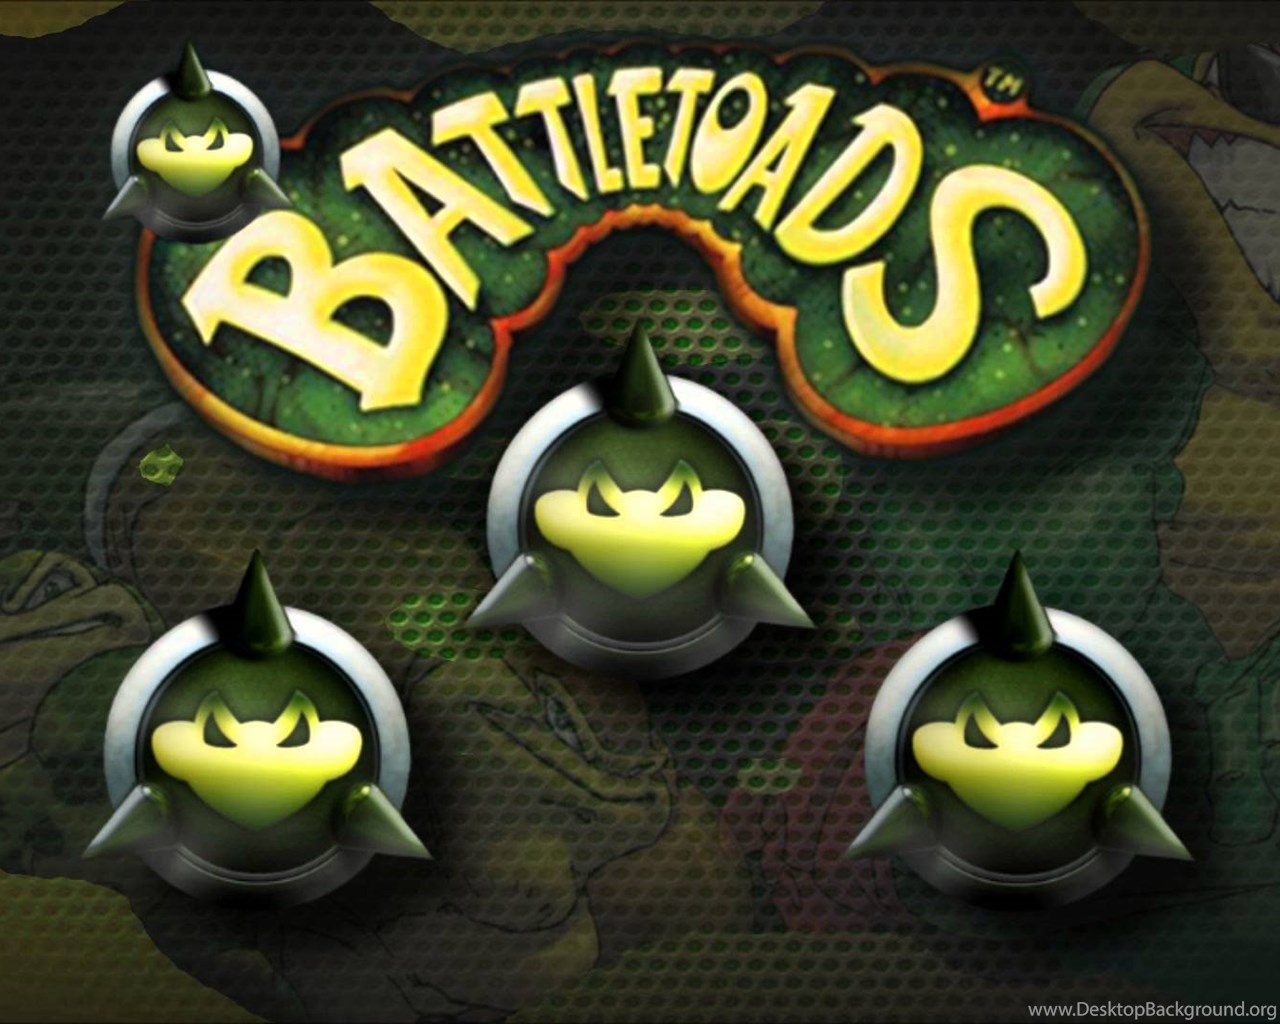 Battletoads remastered. Battletoads. Логотип батлтоадс. Battletoads 2020 logo. Battletoads испуг.